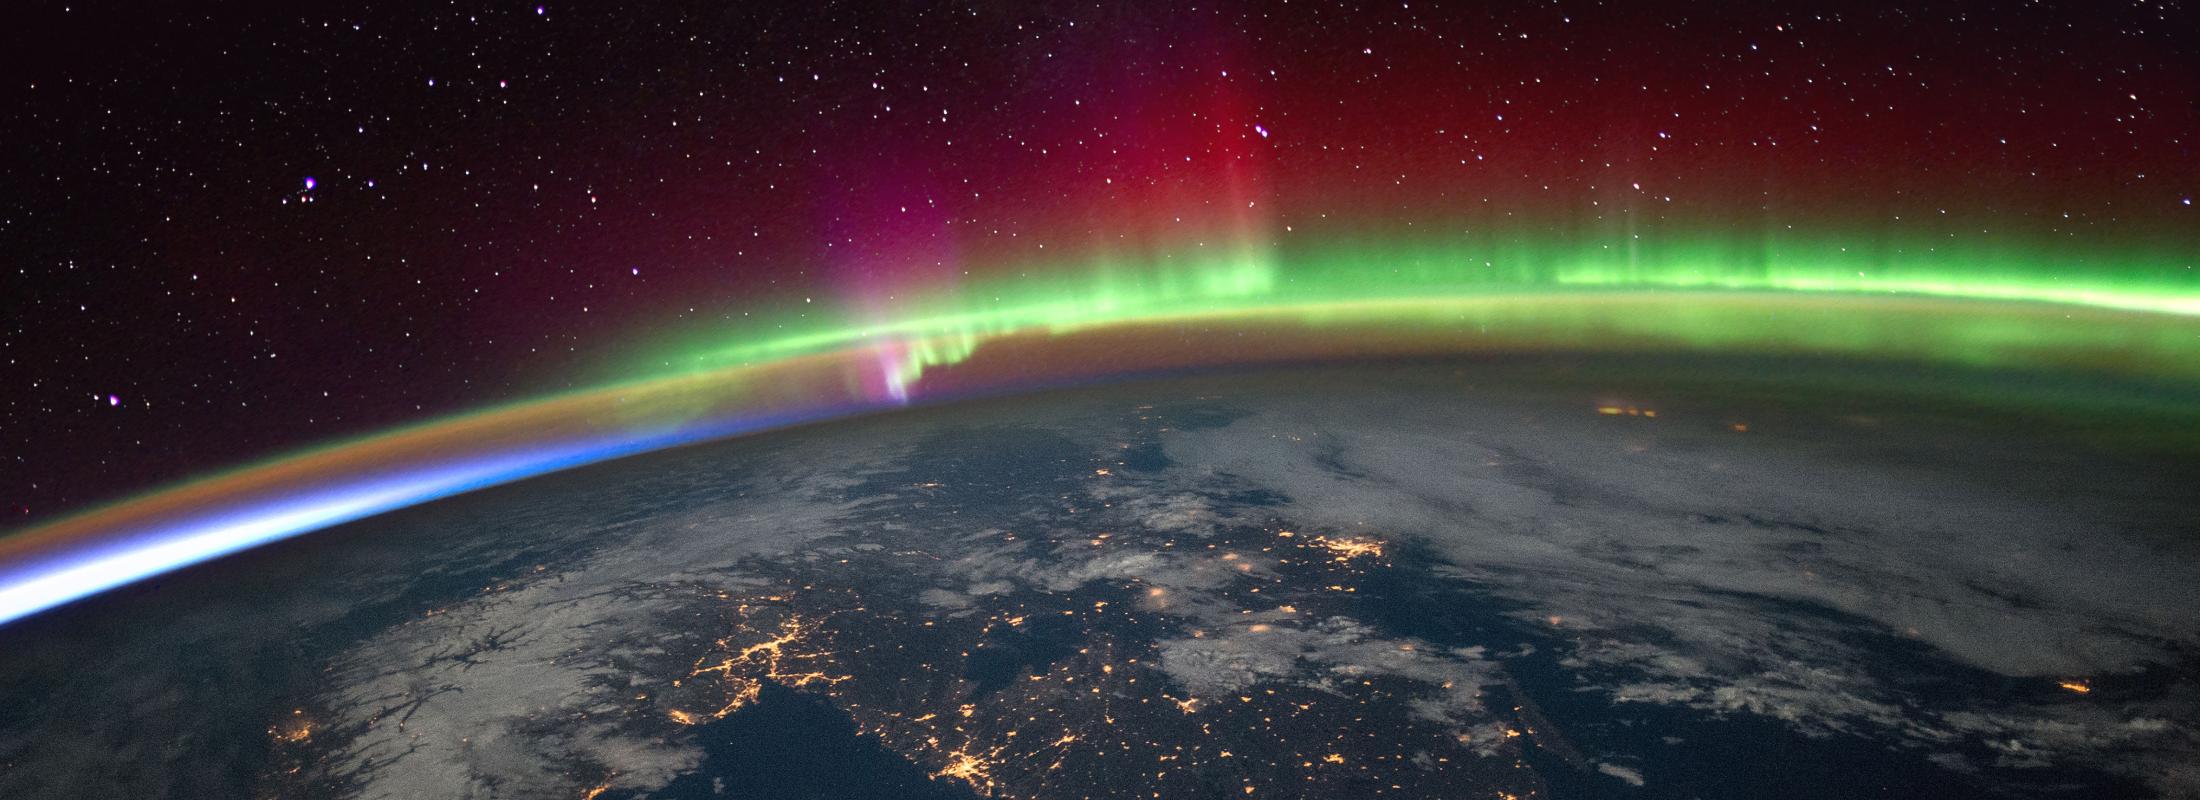 Aurora Borealis from Space by NASA